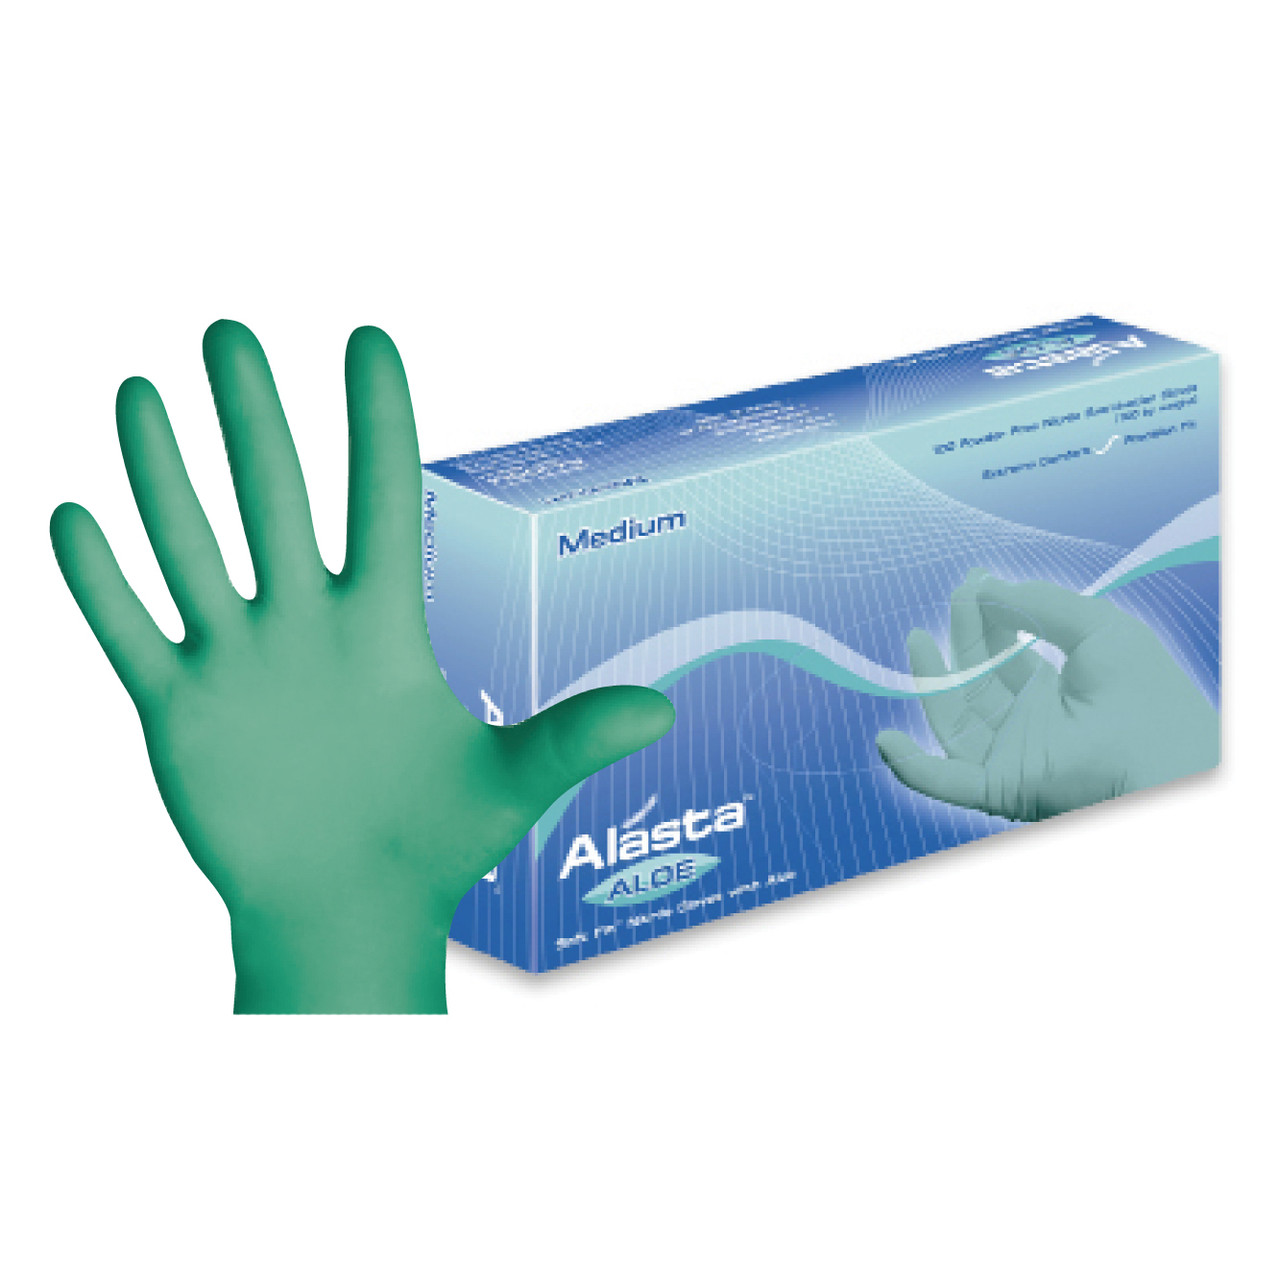 Dash Medical - Alasta Aloe S Powder Free Nitrile Glove